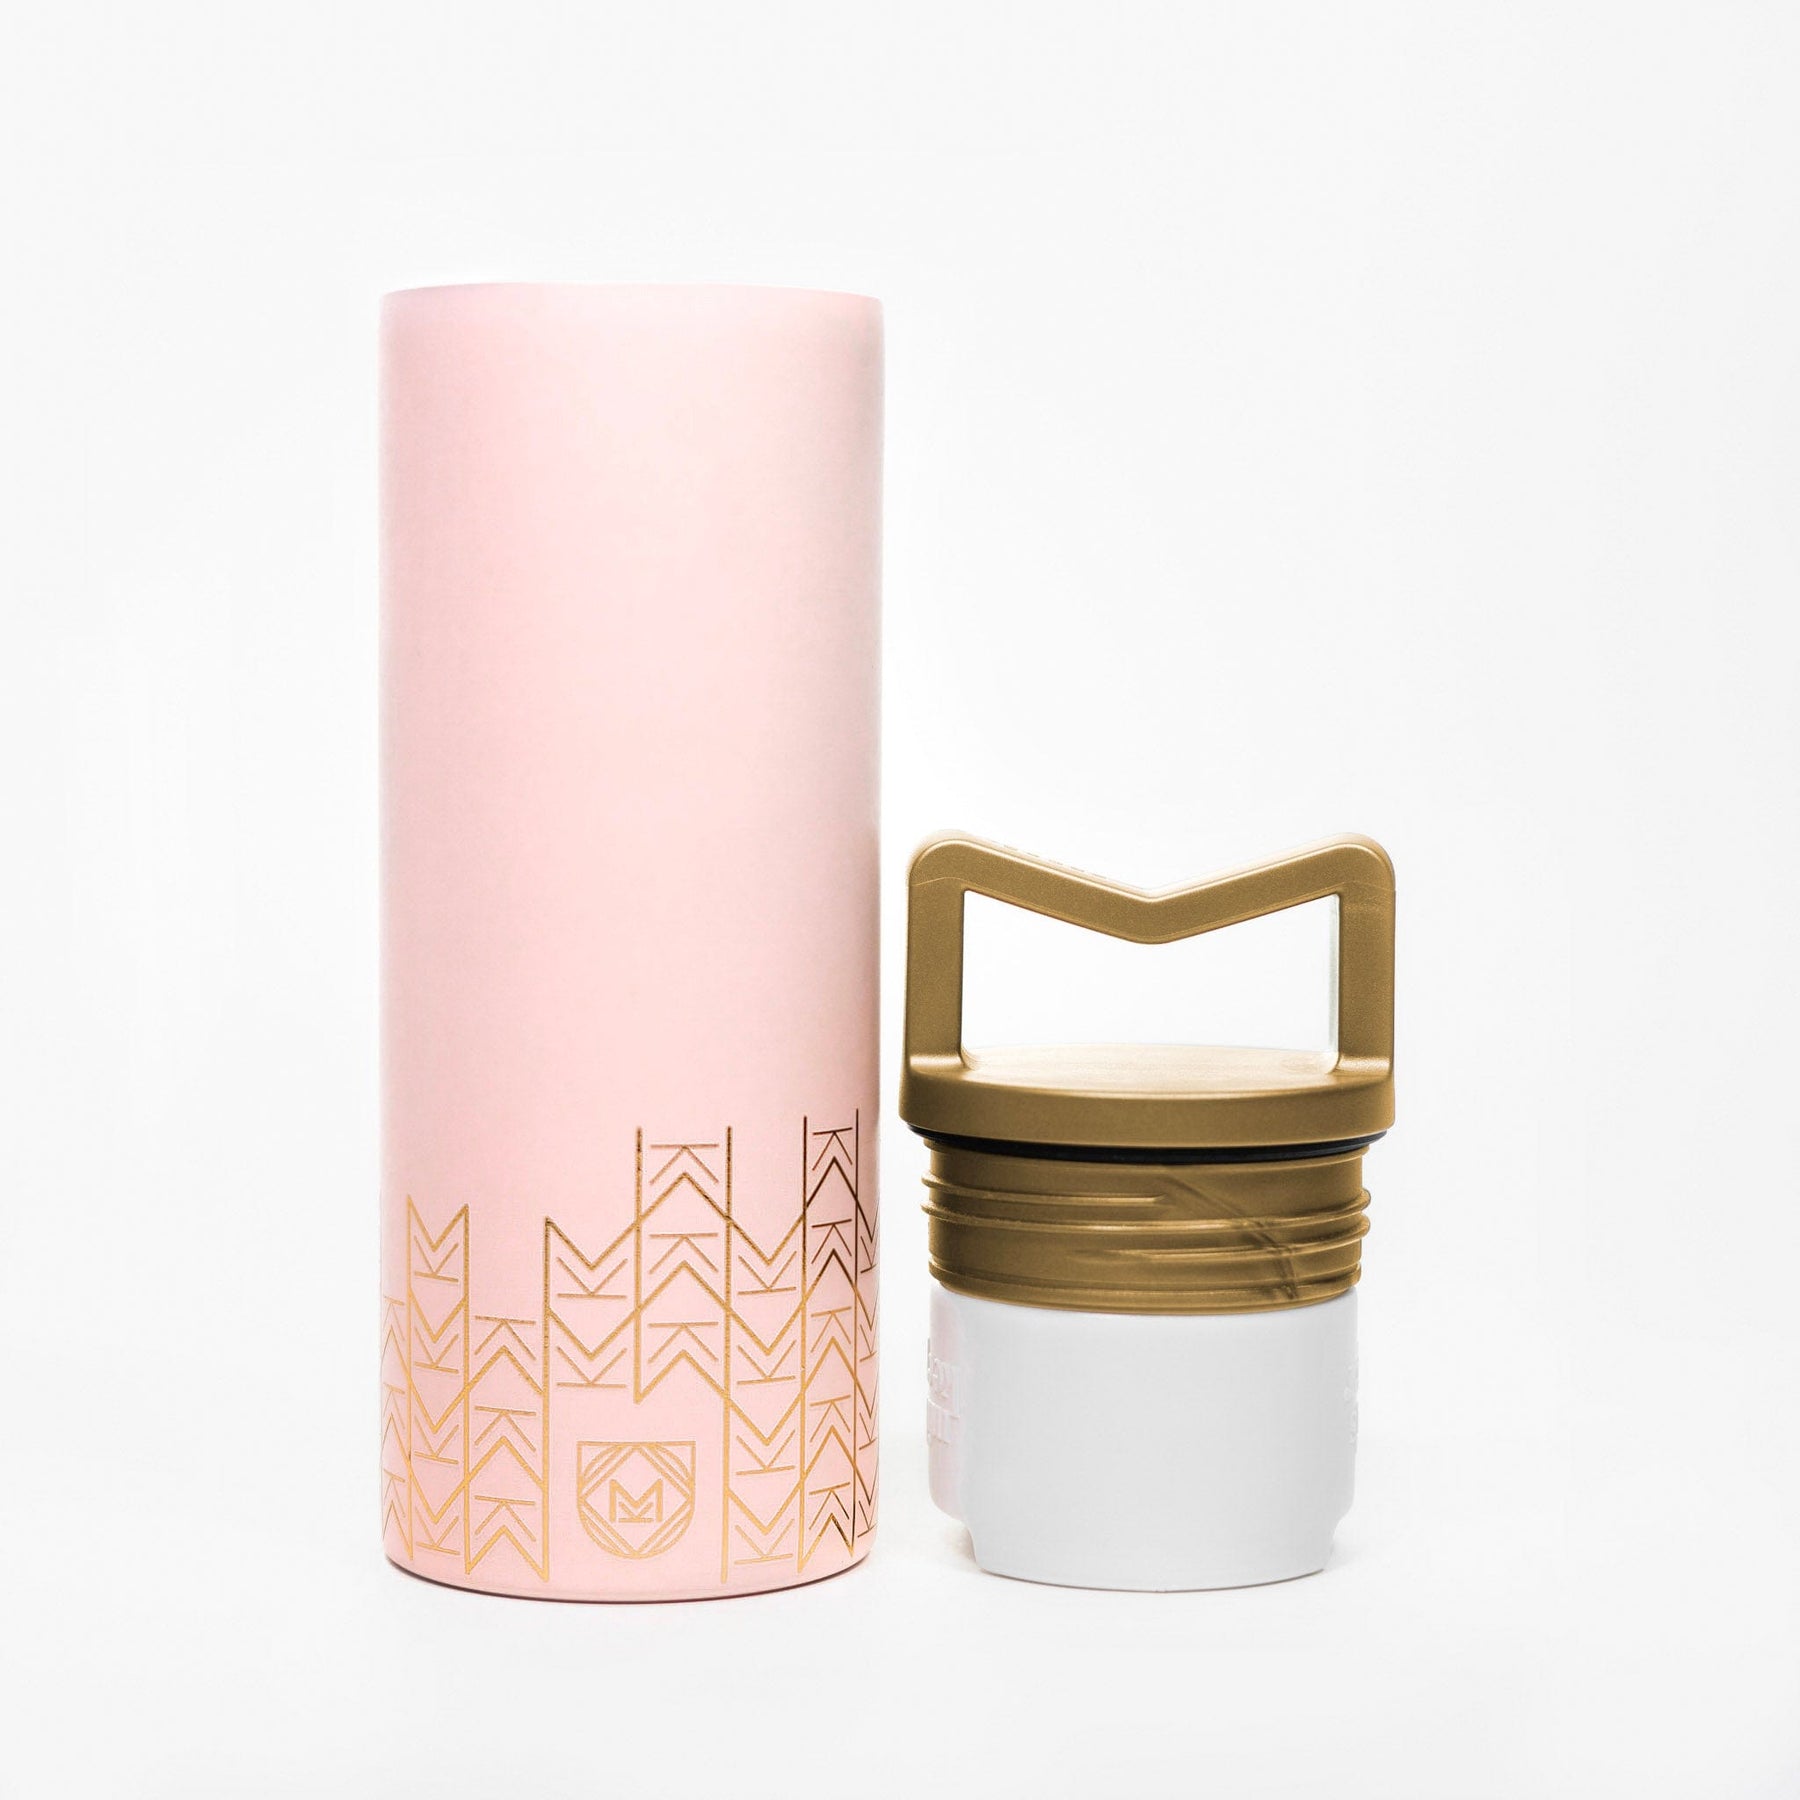 Thermos Premium Double Wall Pastel Pink Thermal Food Storage Jar